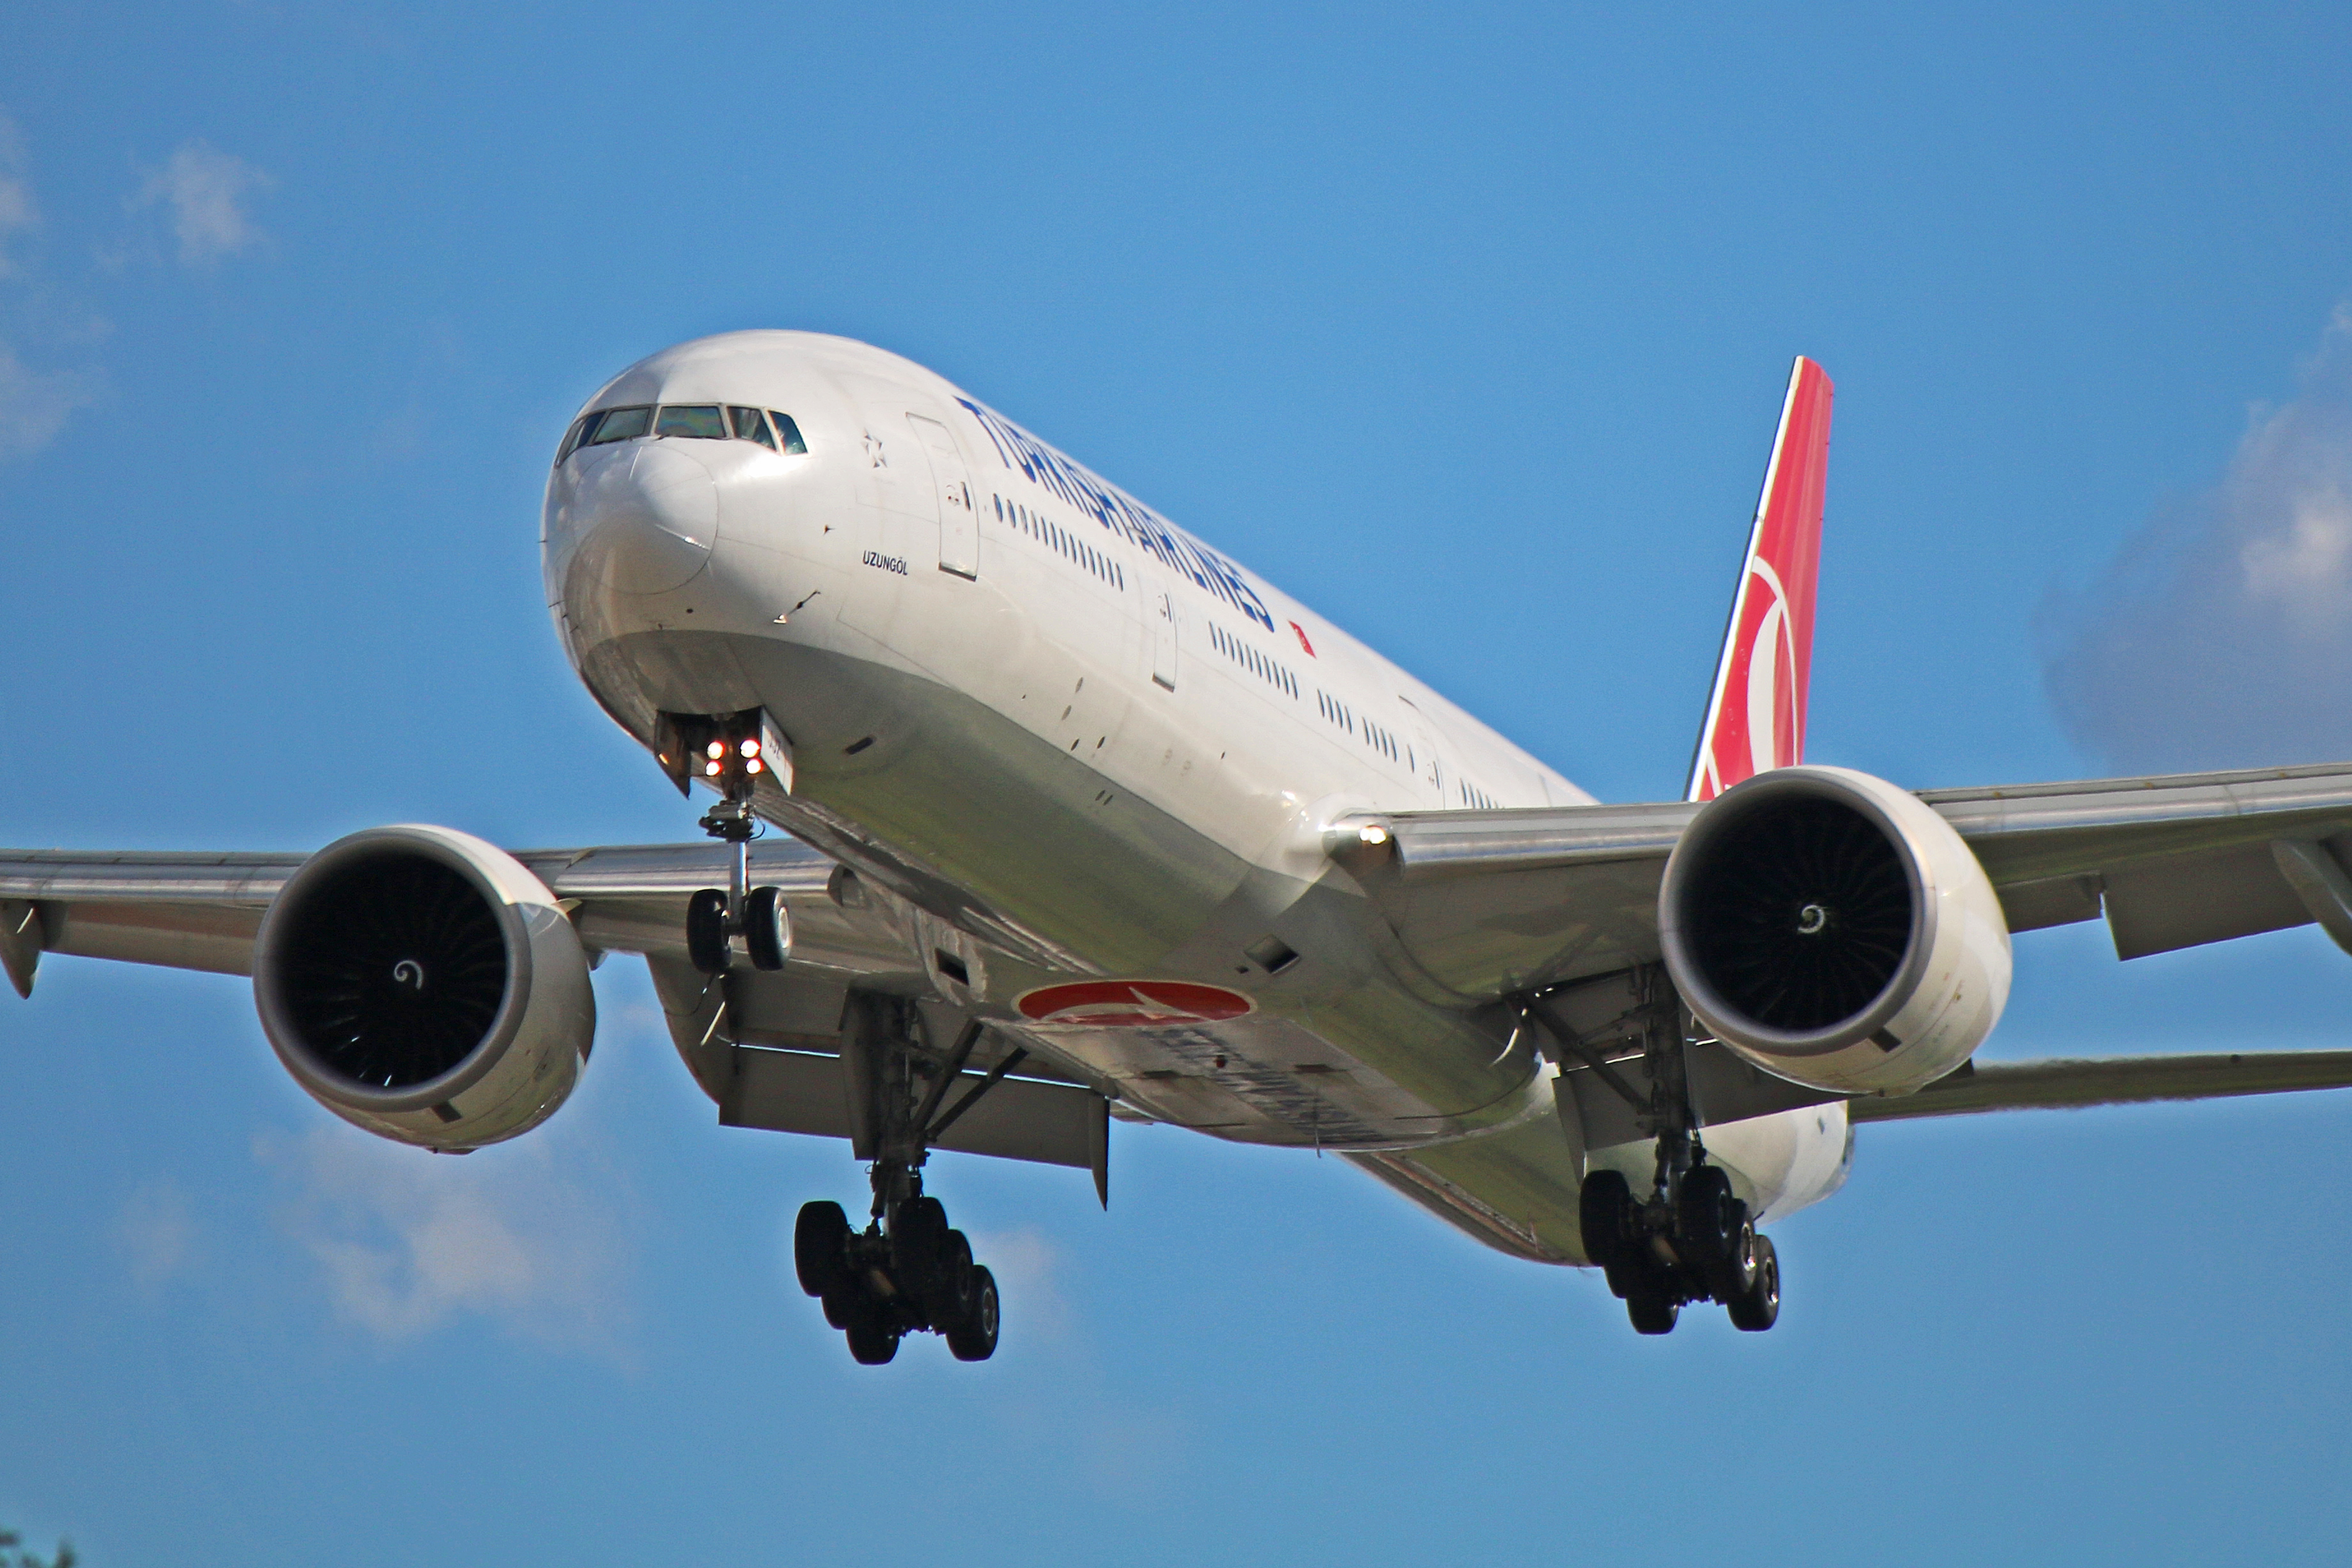 tc-jjz turkish airlines boeing 777-300er toronto pearson yyz